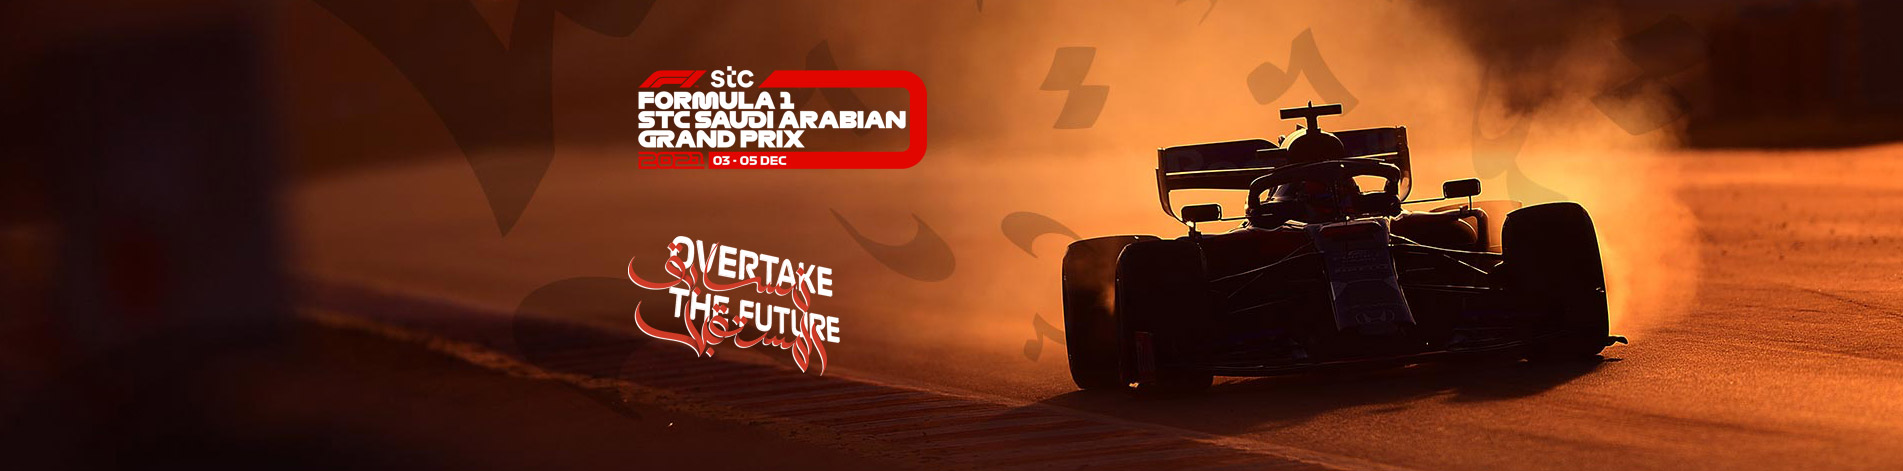 The Formula 1 stc Saudi Arabian Grand Prix